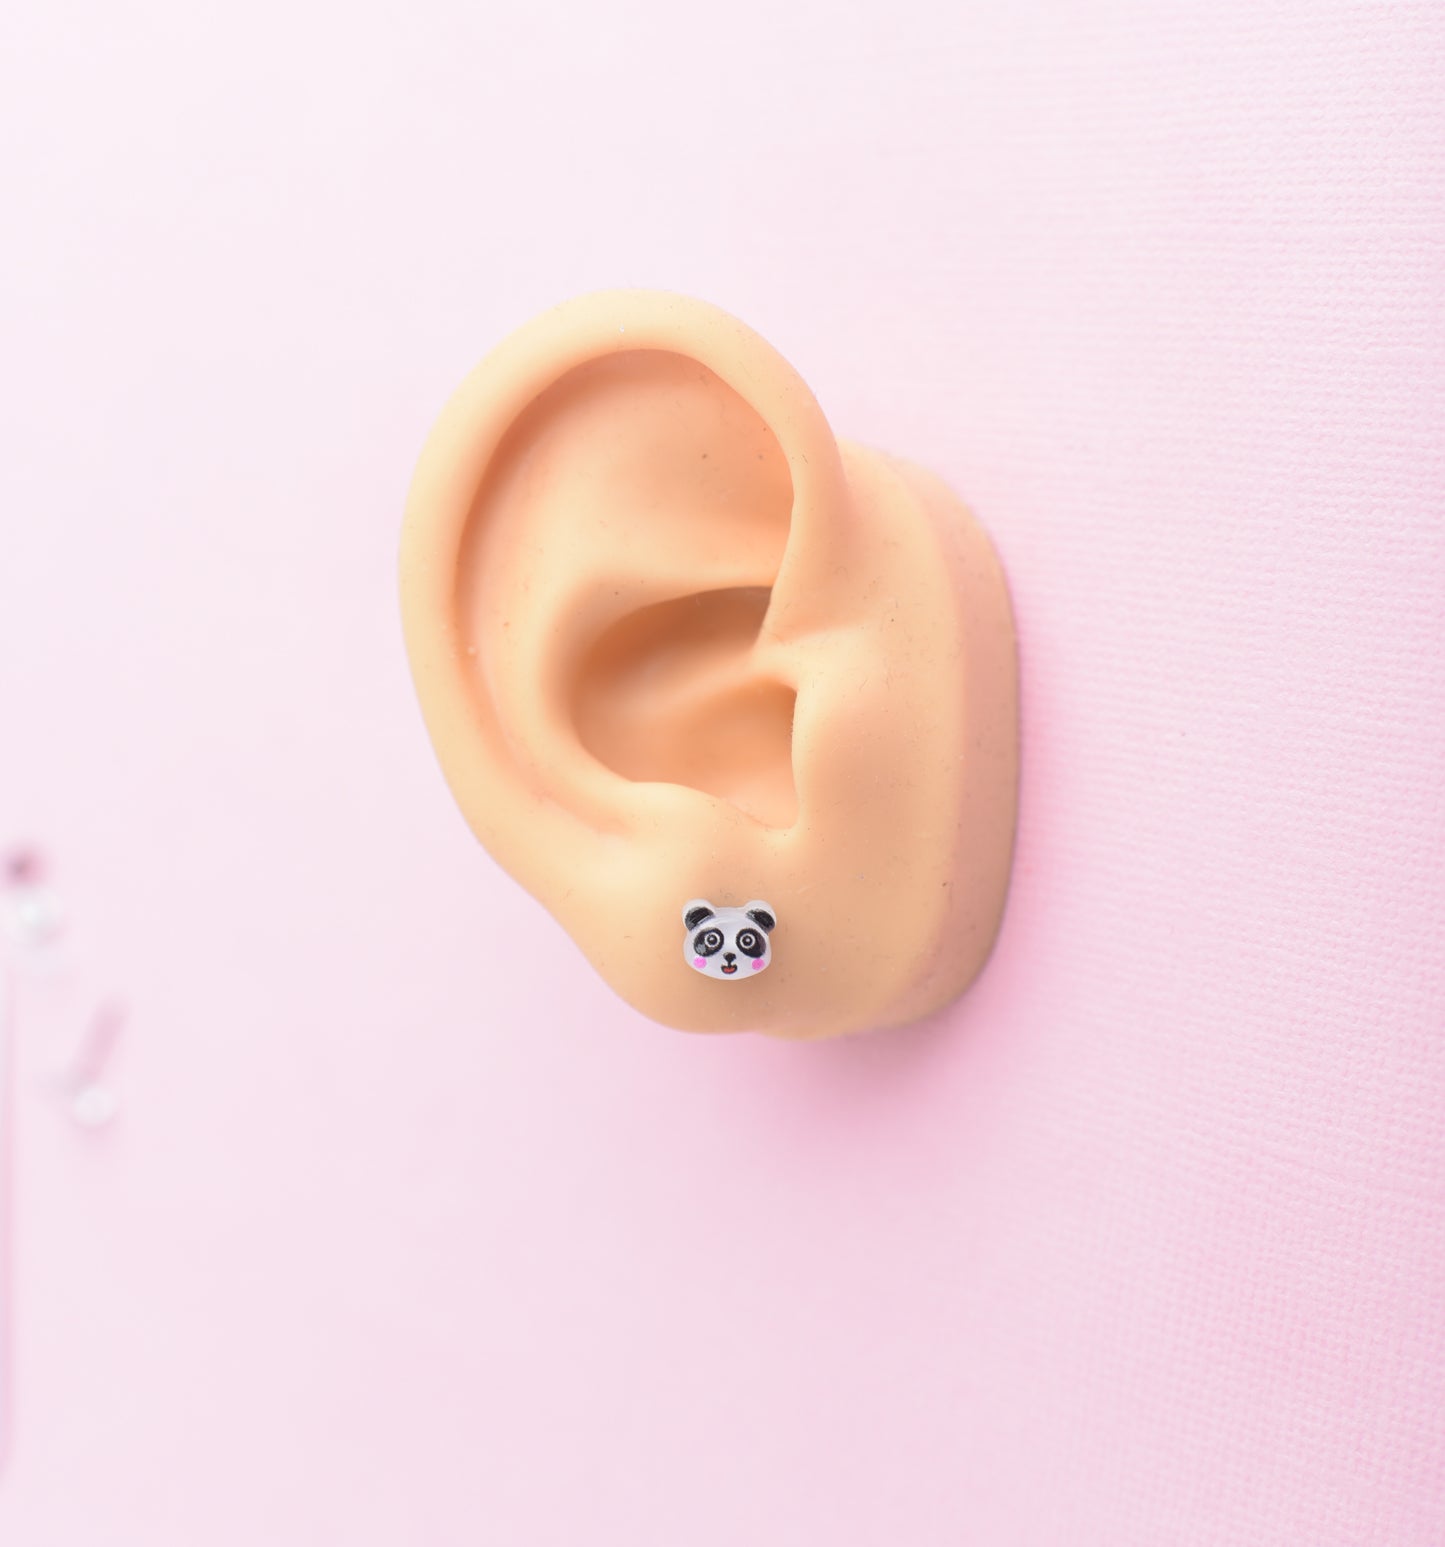 Tiny Panda Bear Earrings with Titanium Posts